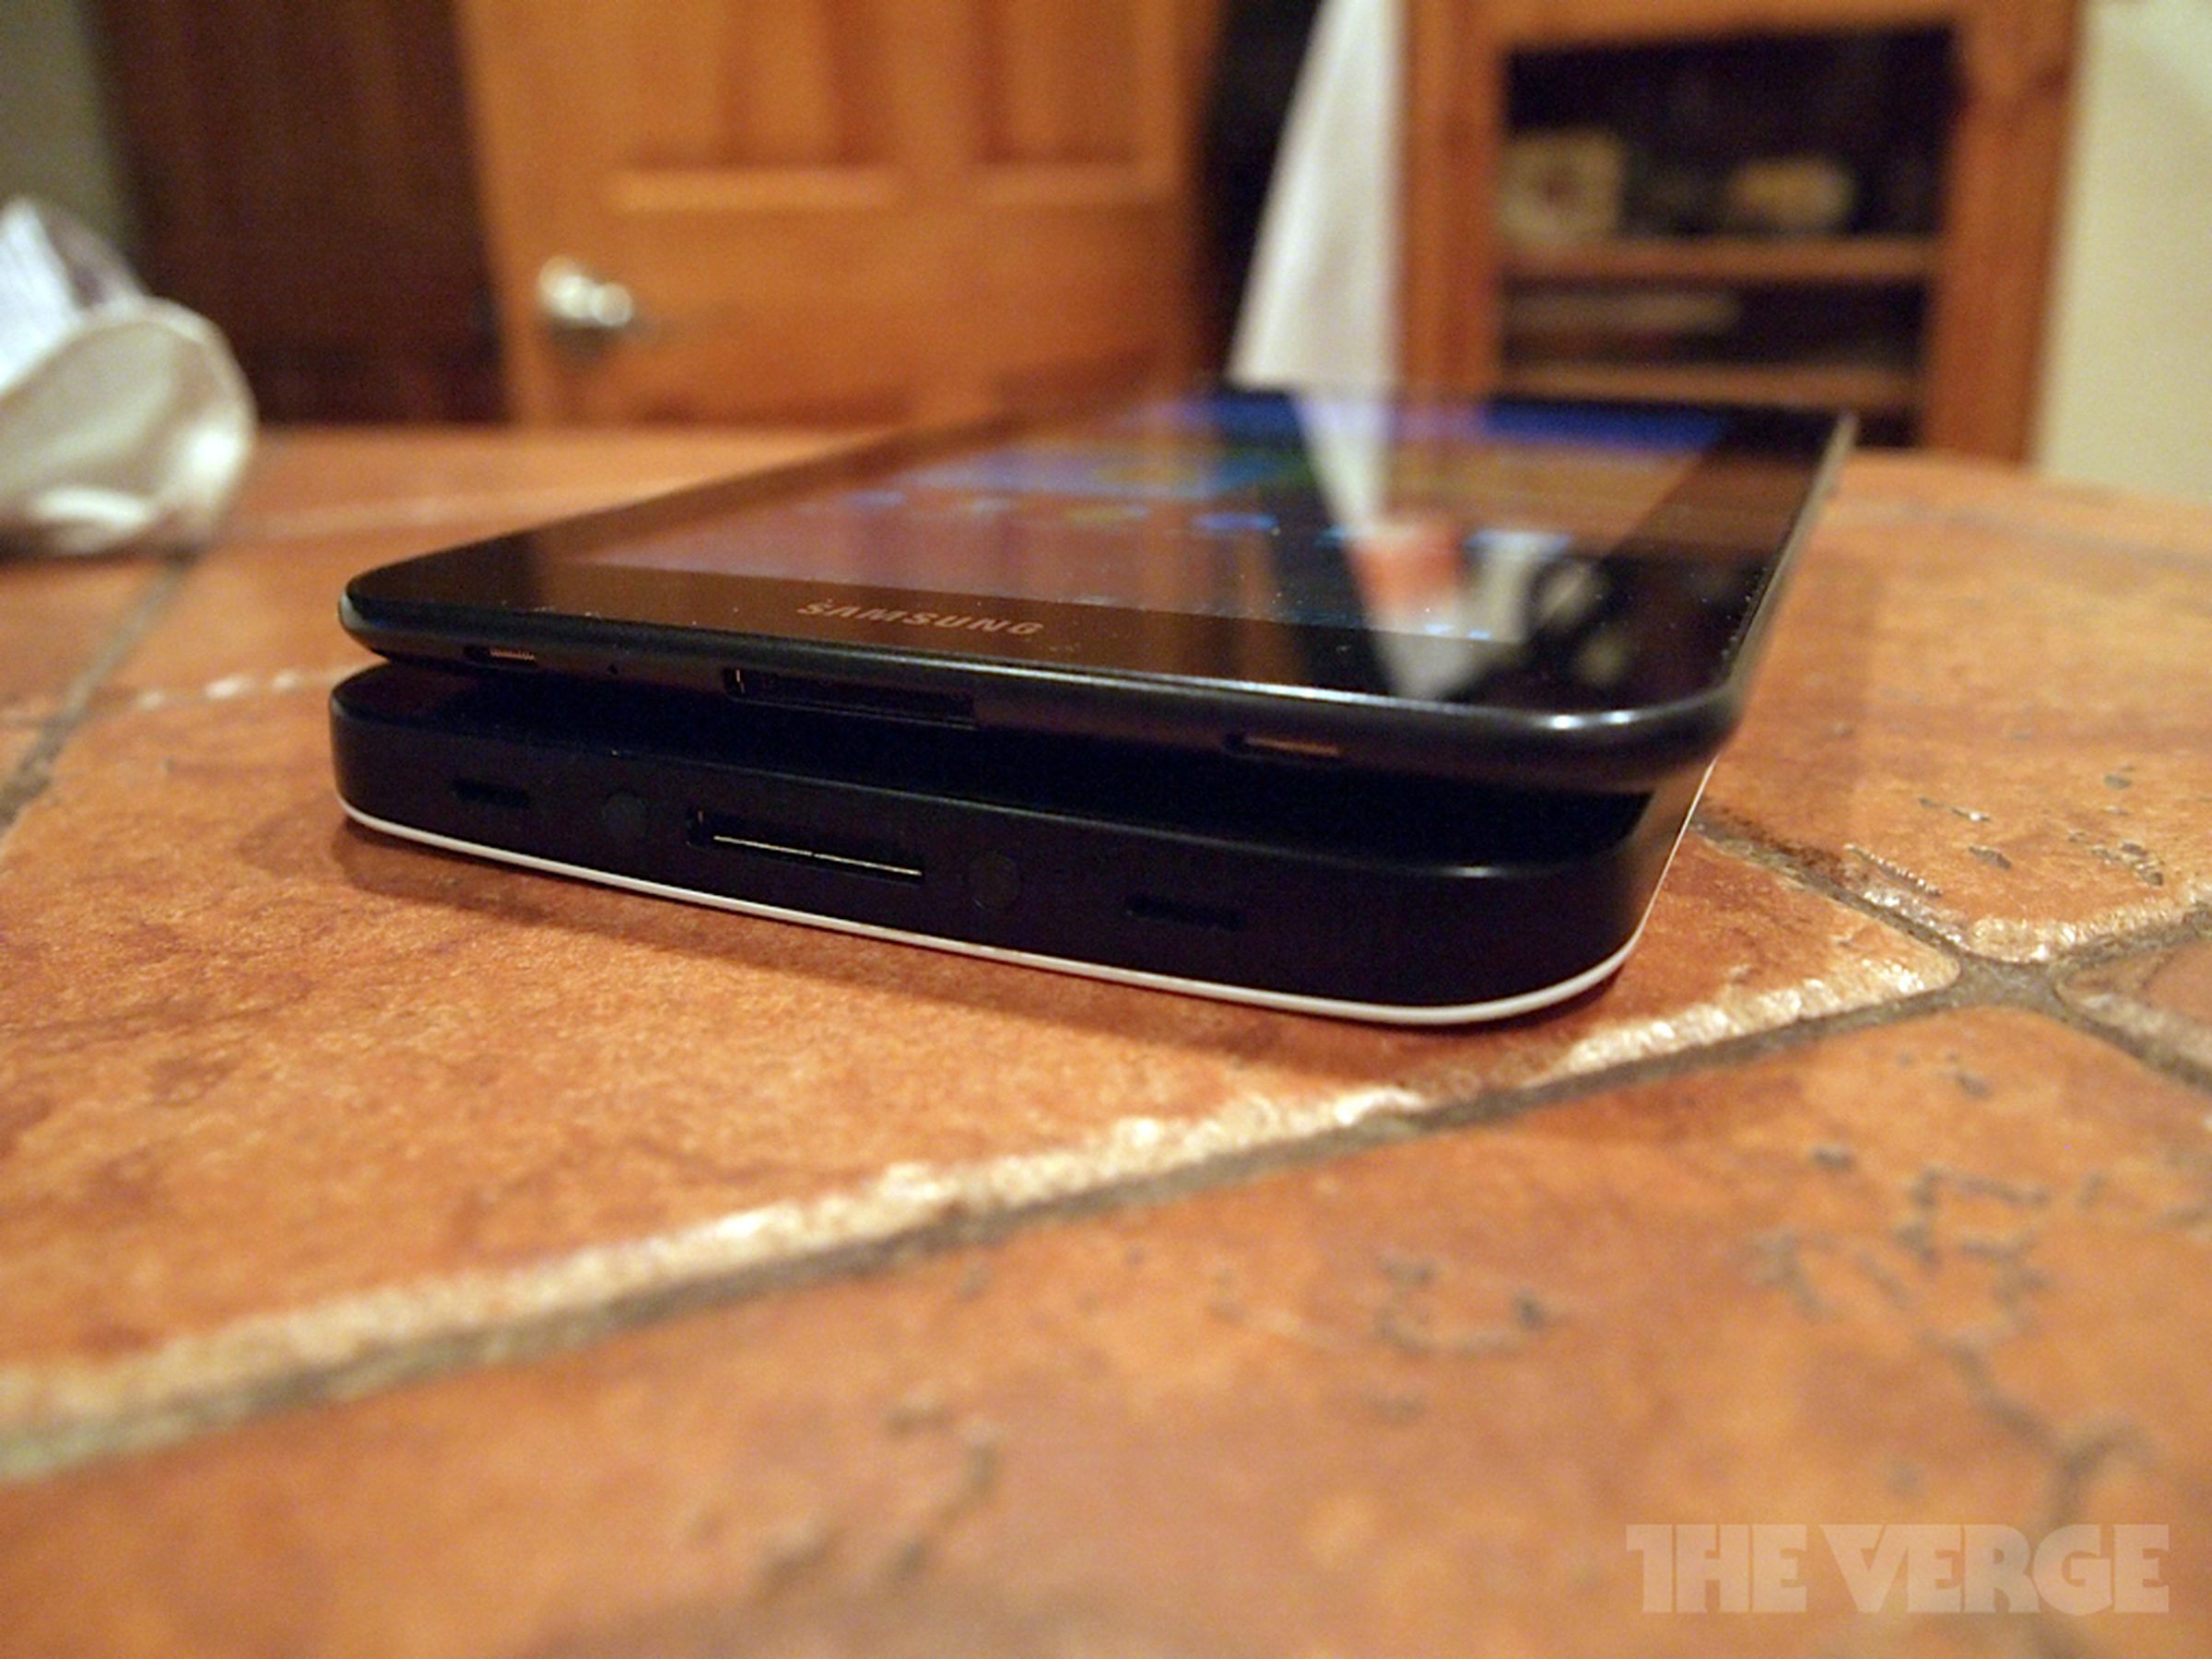 Samsung Galaxy Tab 7.0 Plus Review photos